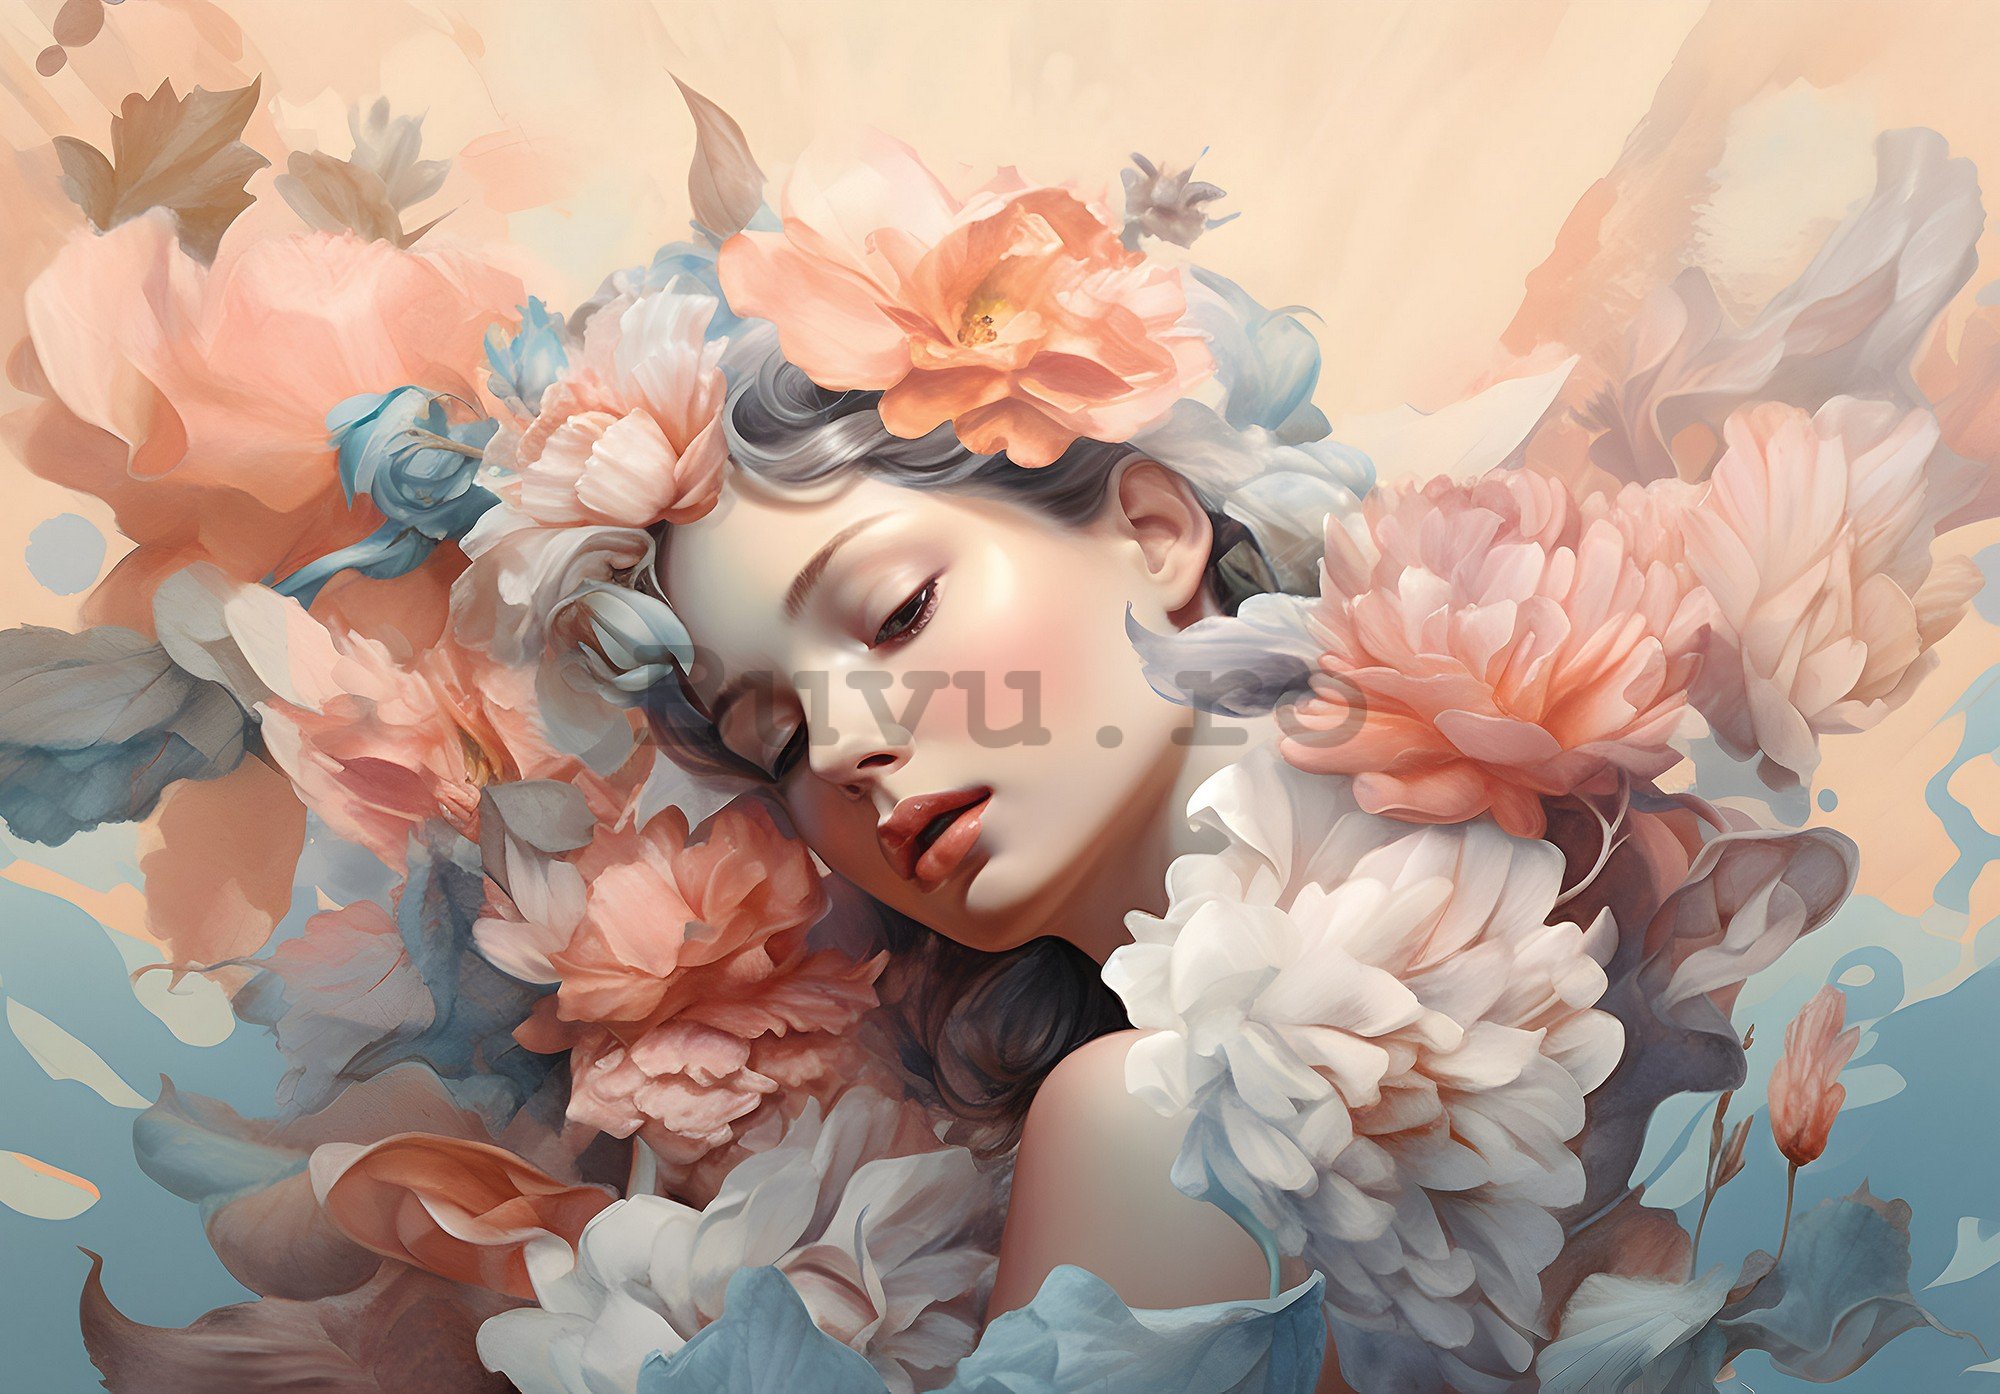 Fototapet vlies: Woman flowers pastel elegance (1) - 254x184 cm